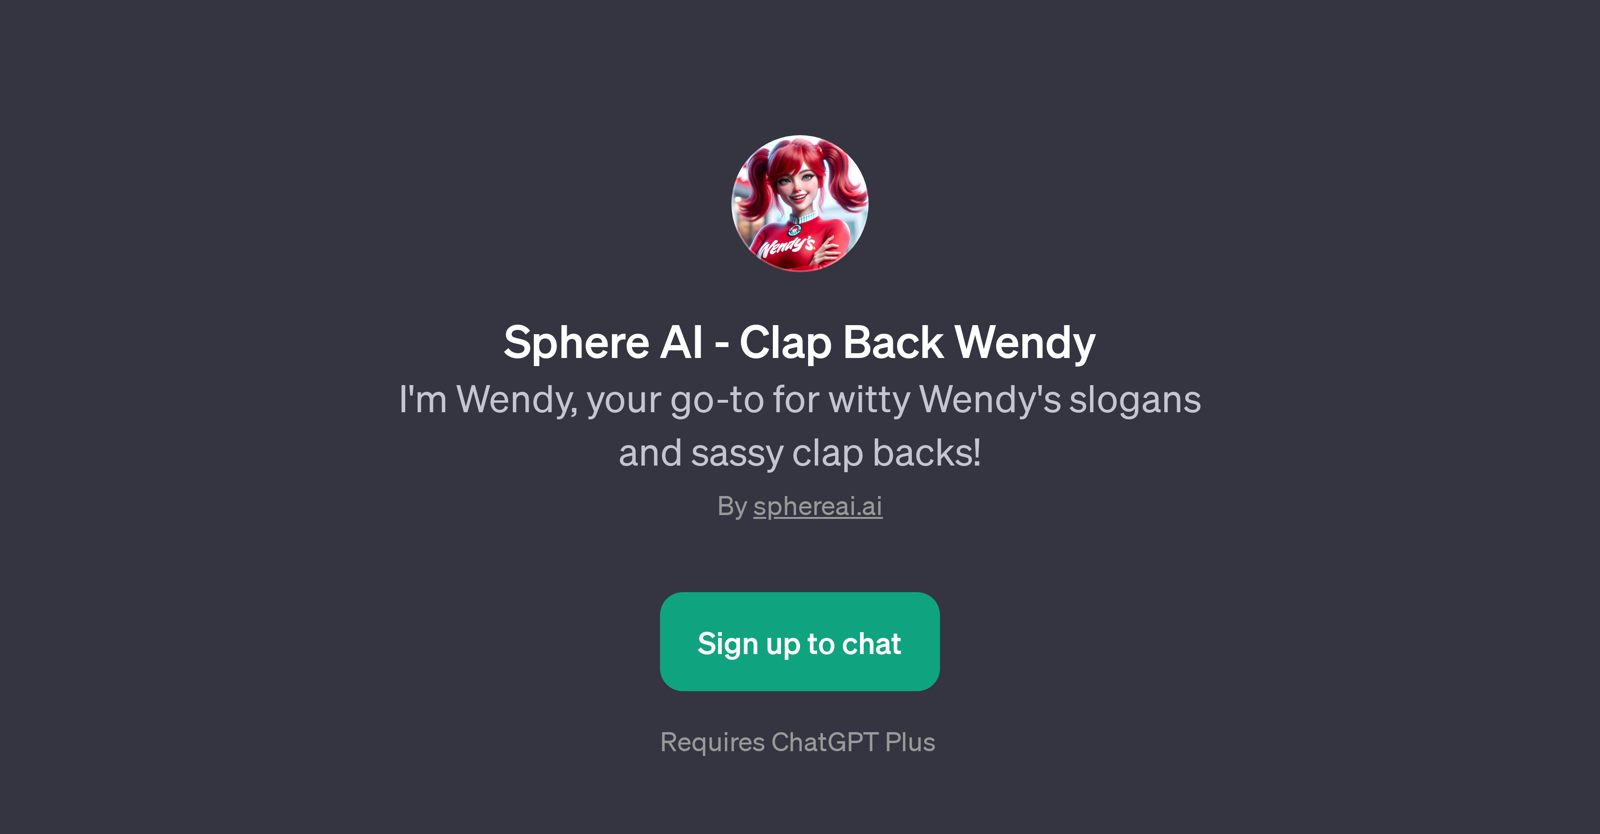 Sphere AI - Clap Back Wendy website